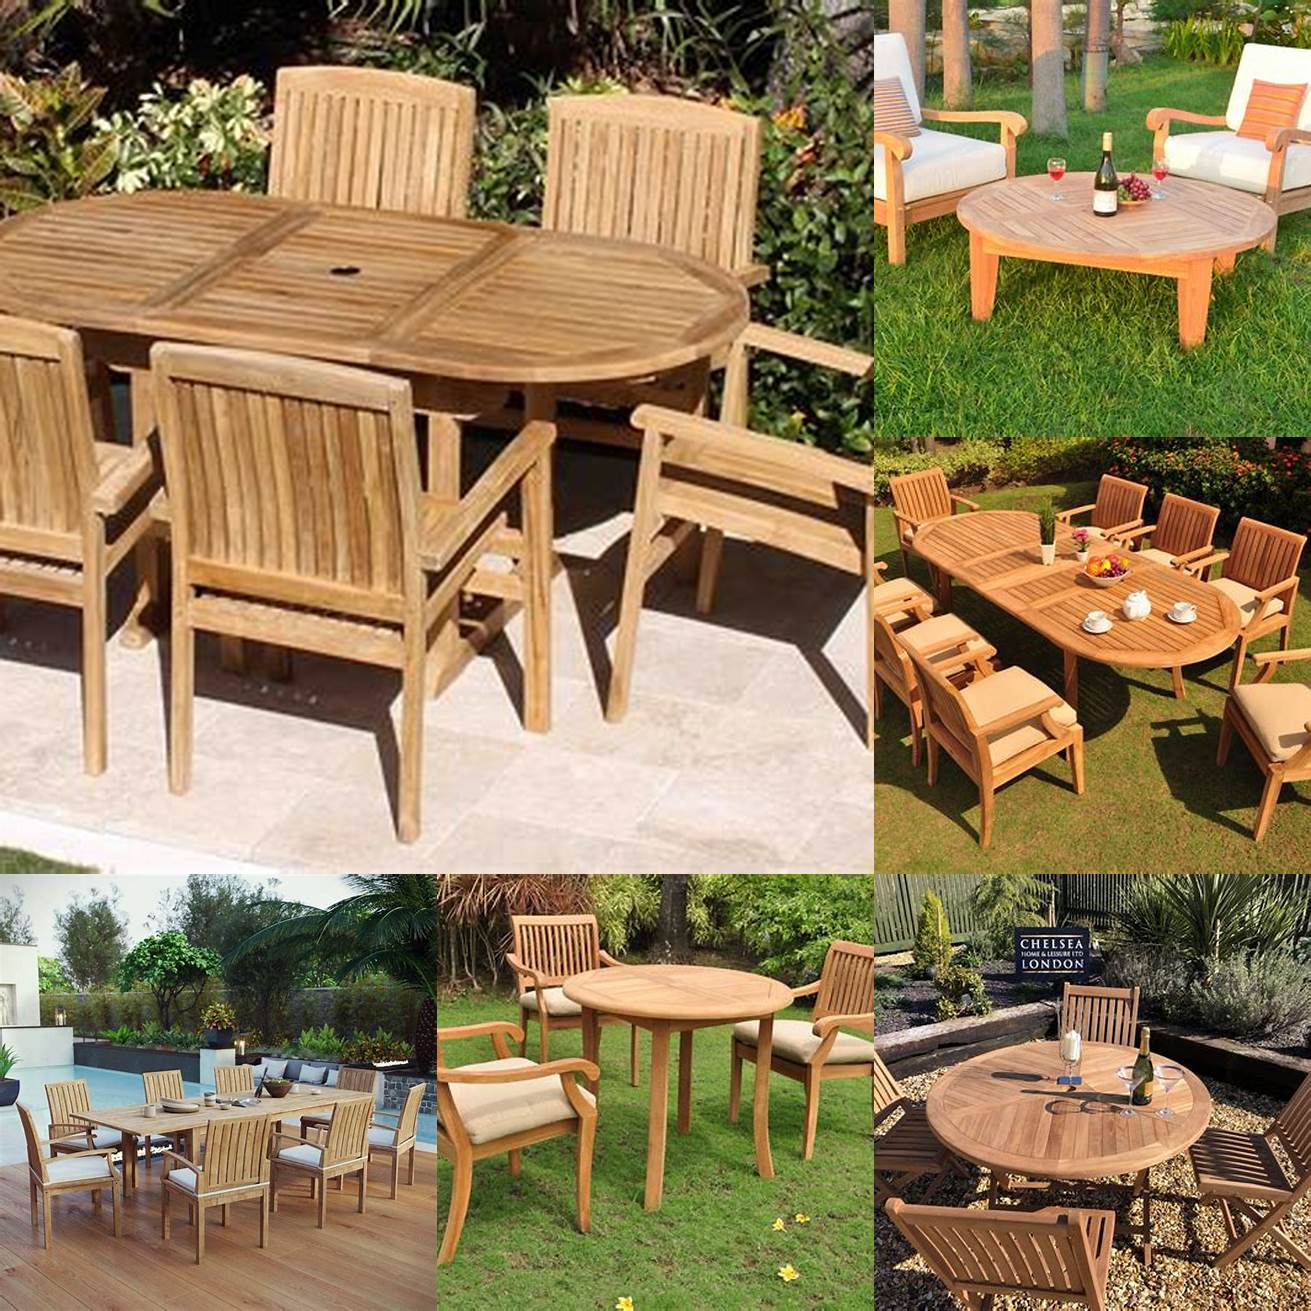 Teak furniture in an outdoor setting